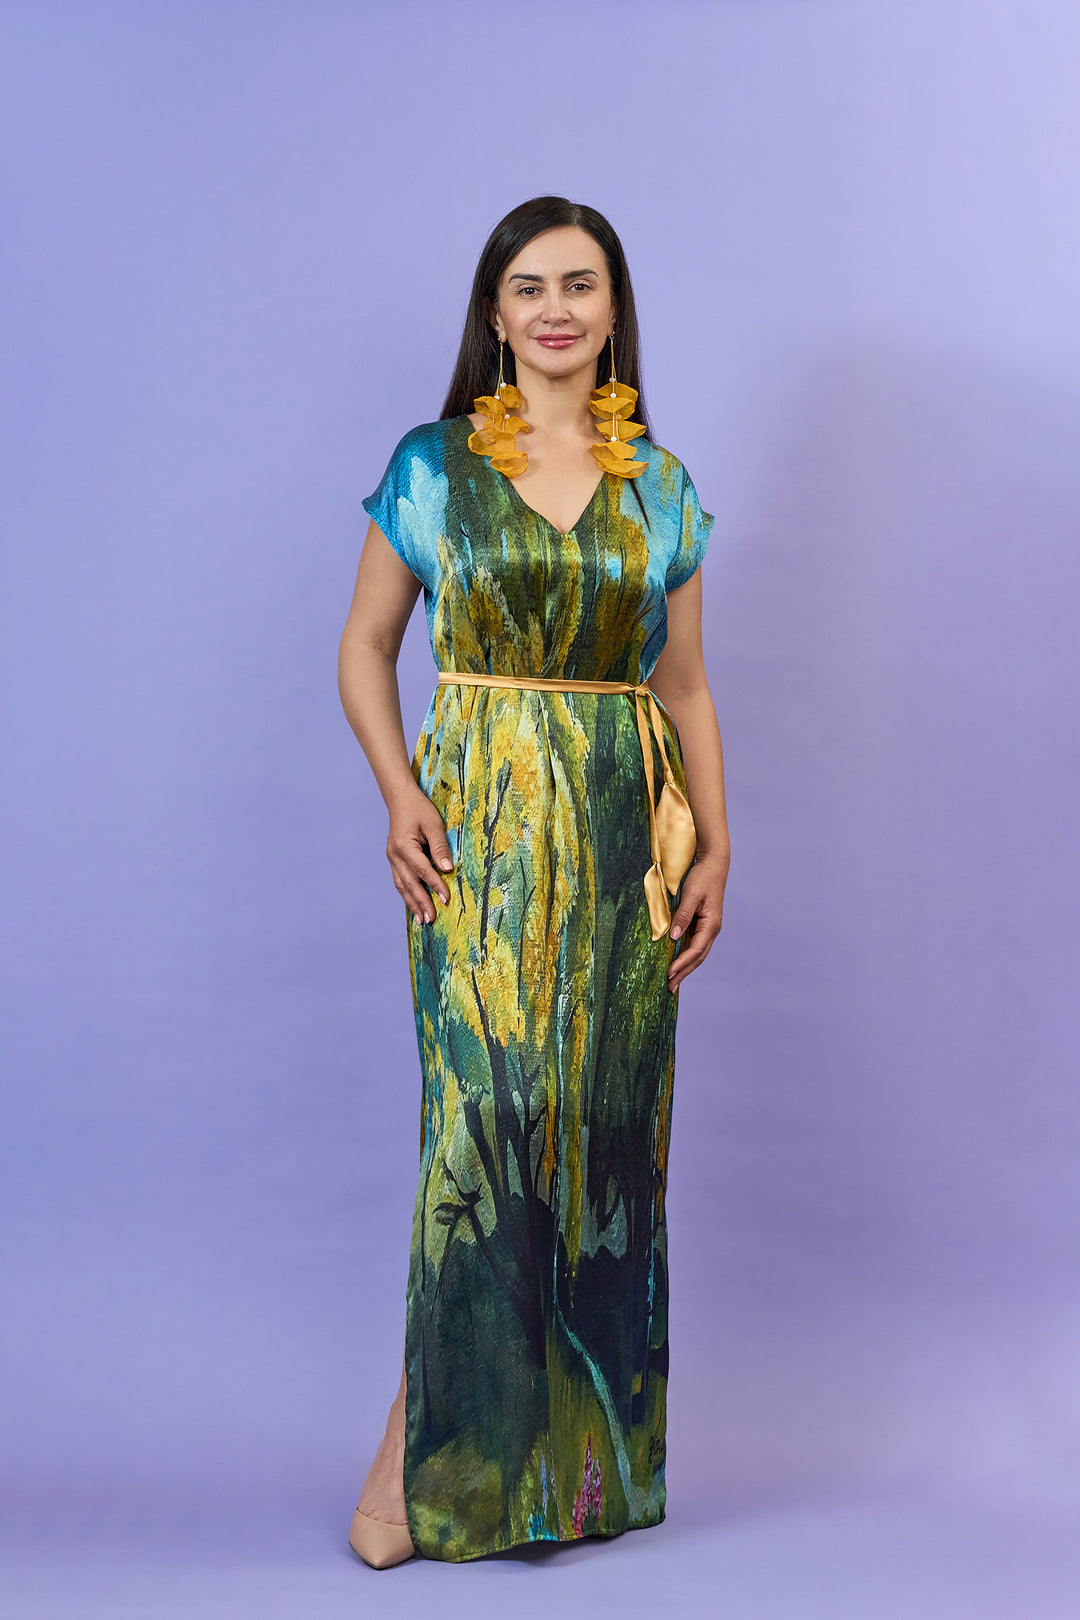 Designer Alesia C. 100% Silk Straight Caftan Slit Belted Dress in Gold Forest Green AlesiaC.com Art-A-Porte